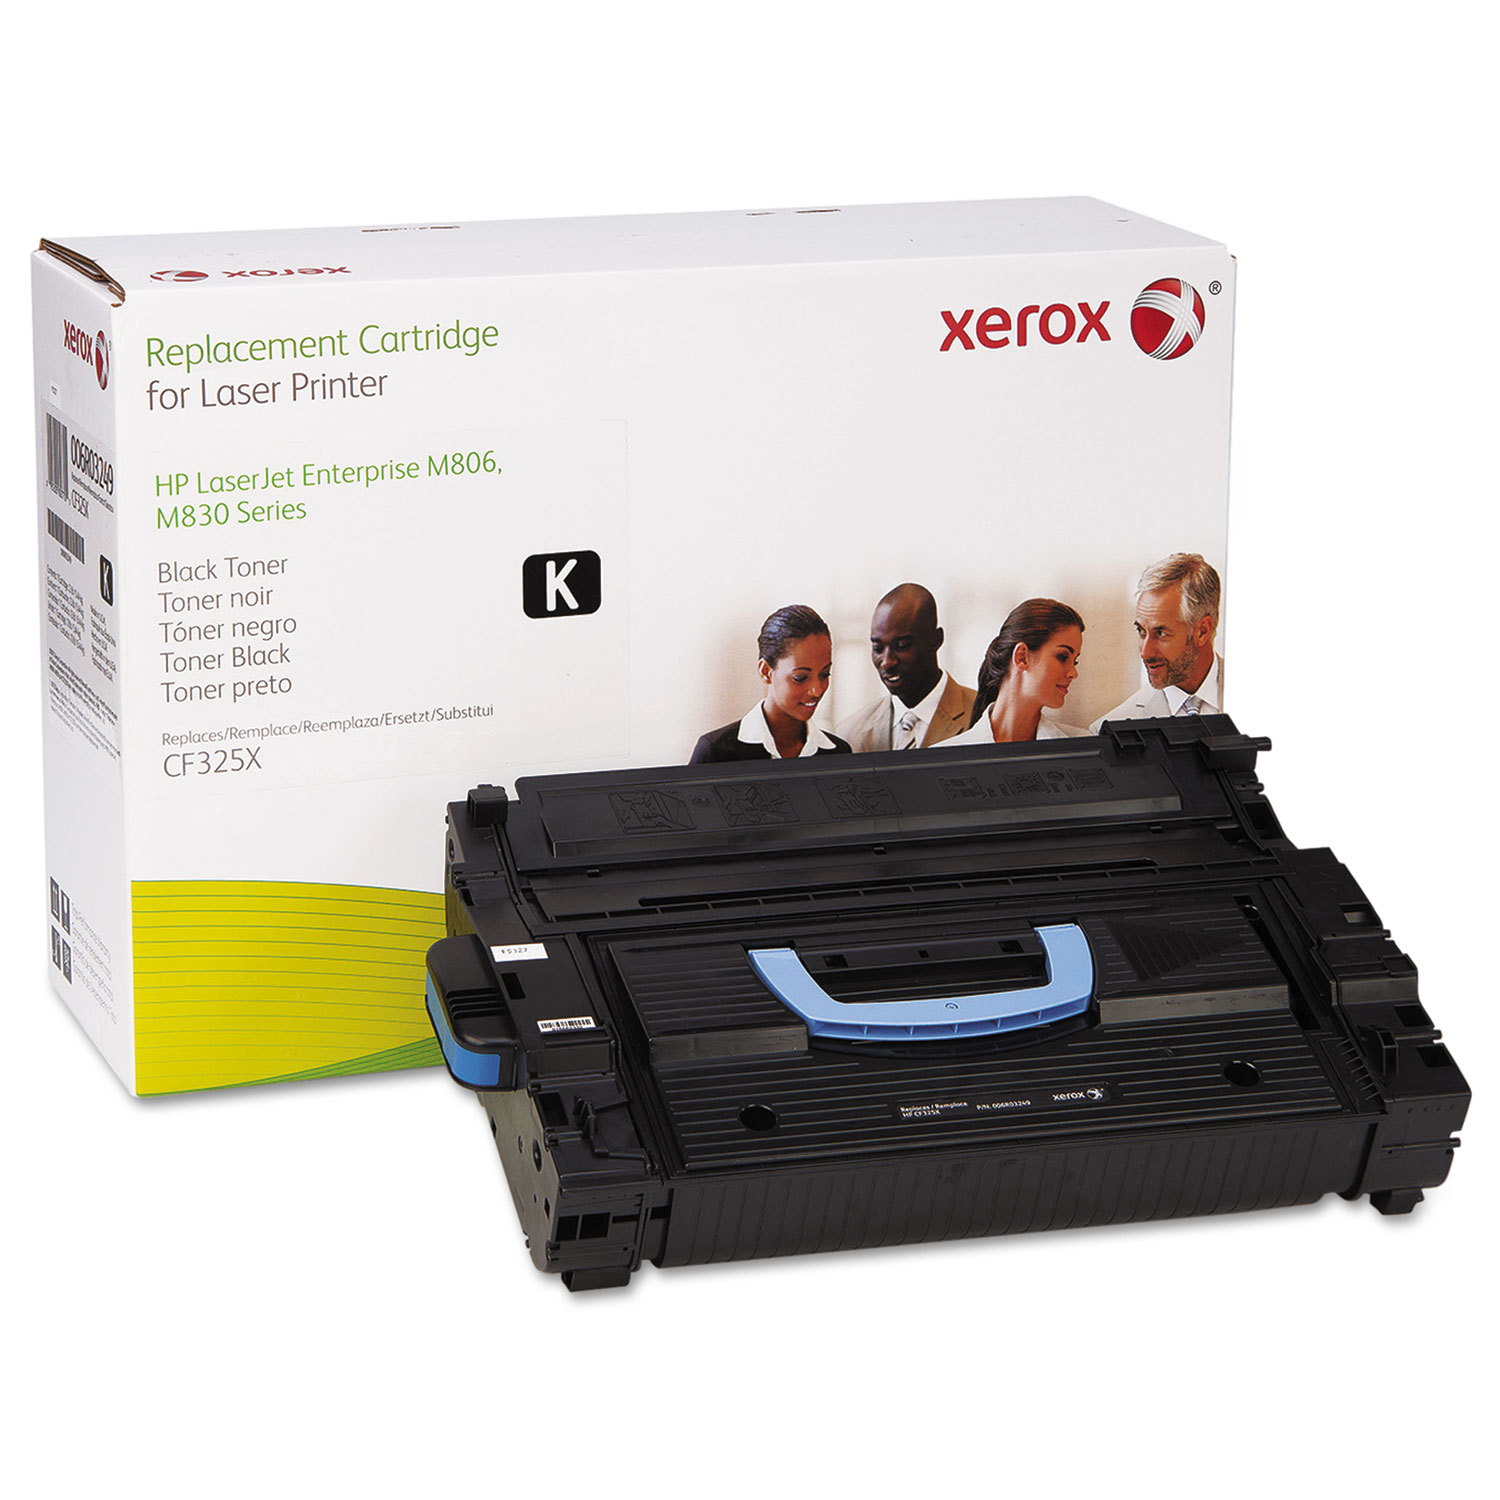  Xerox 006R03249 006R03249 Remanufactured CF325X (25X) High-Yield Toner, 34500 Page-Yield, Black (XER006R03249) 